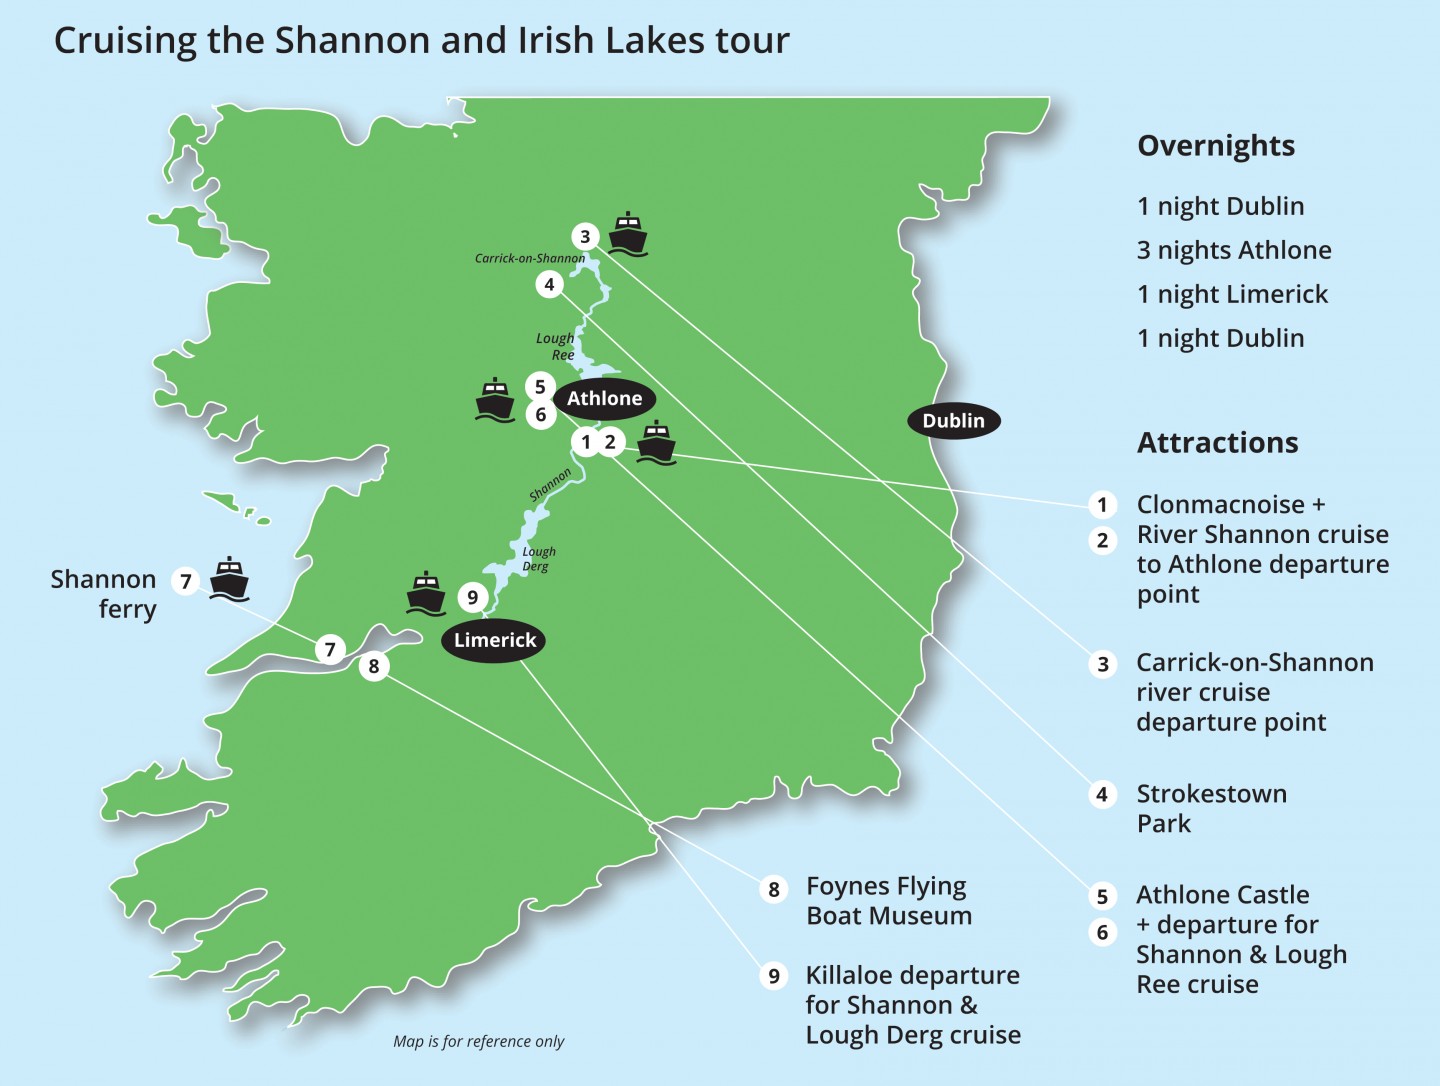 Cruising the Shannon and Irish Lakes map